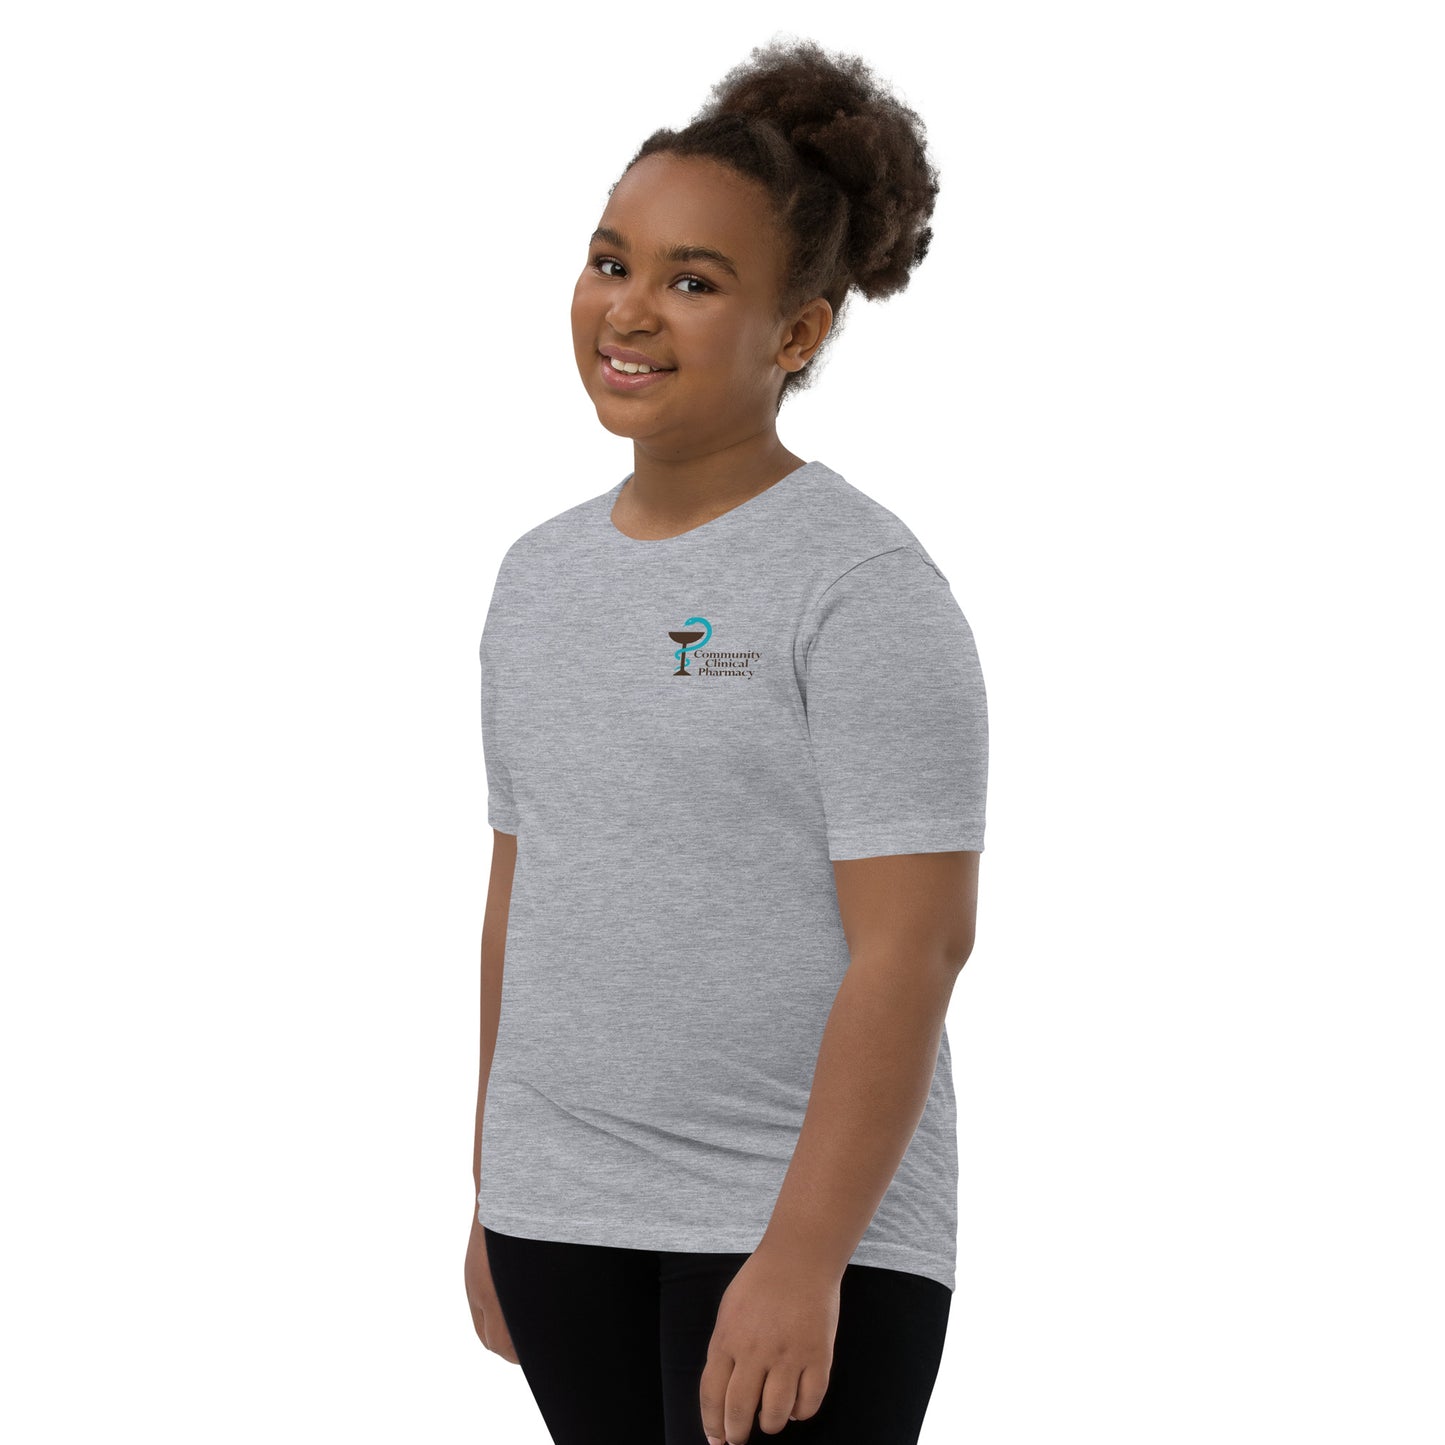 Youth Short Sleeve T-Shirt - Community Clinical Pharmacy